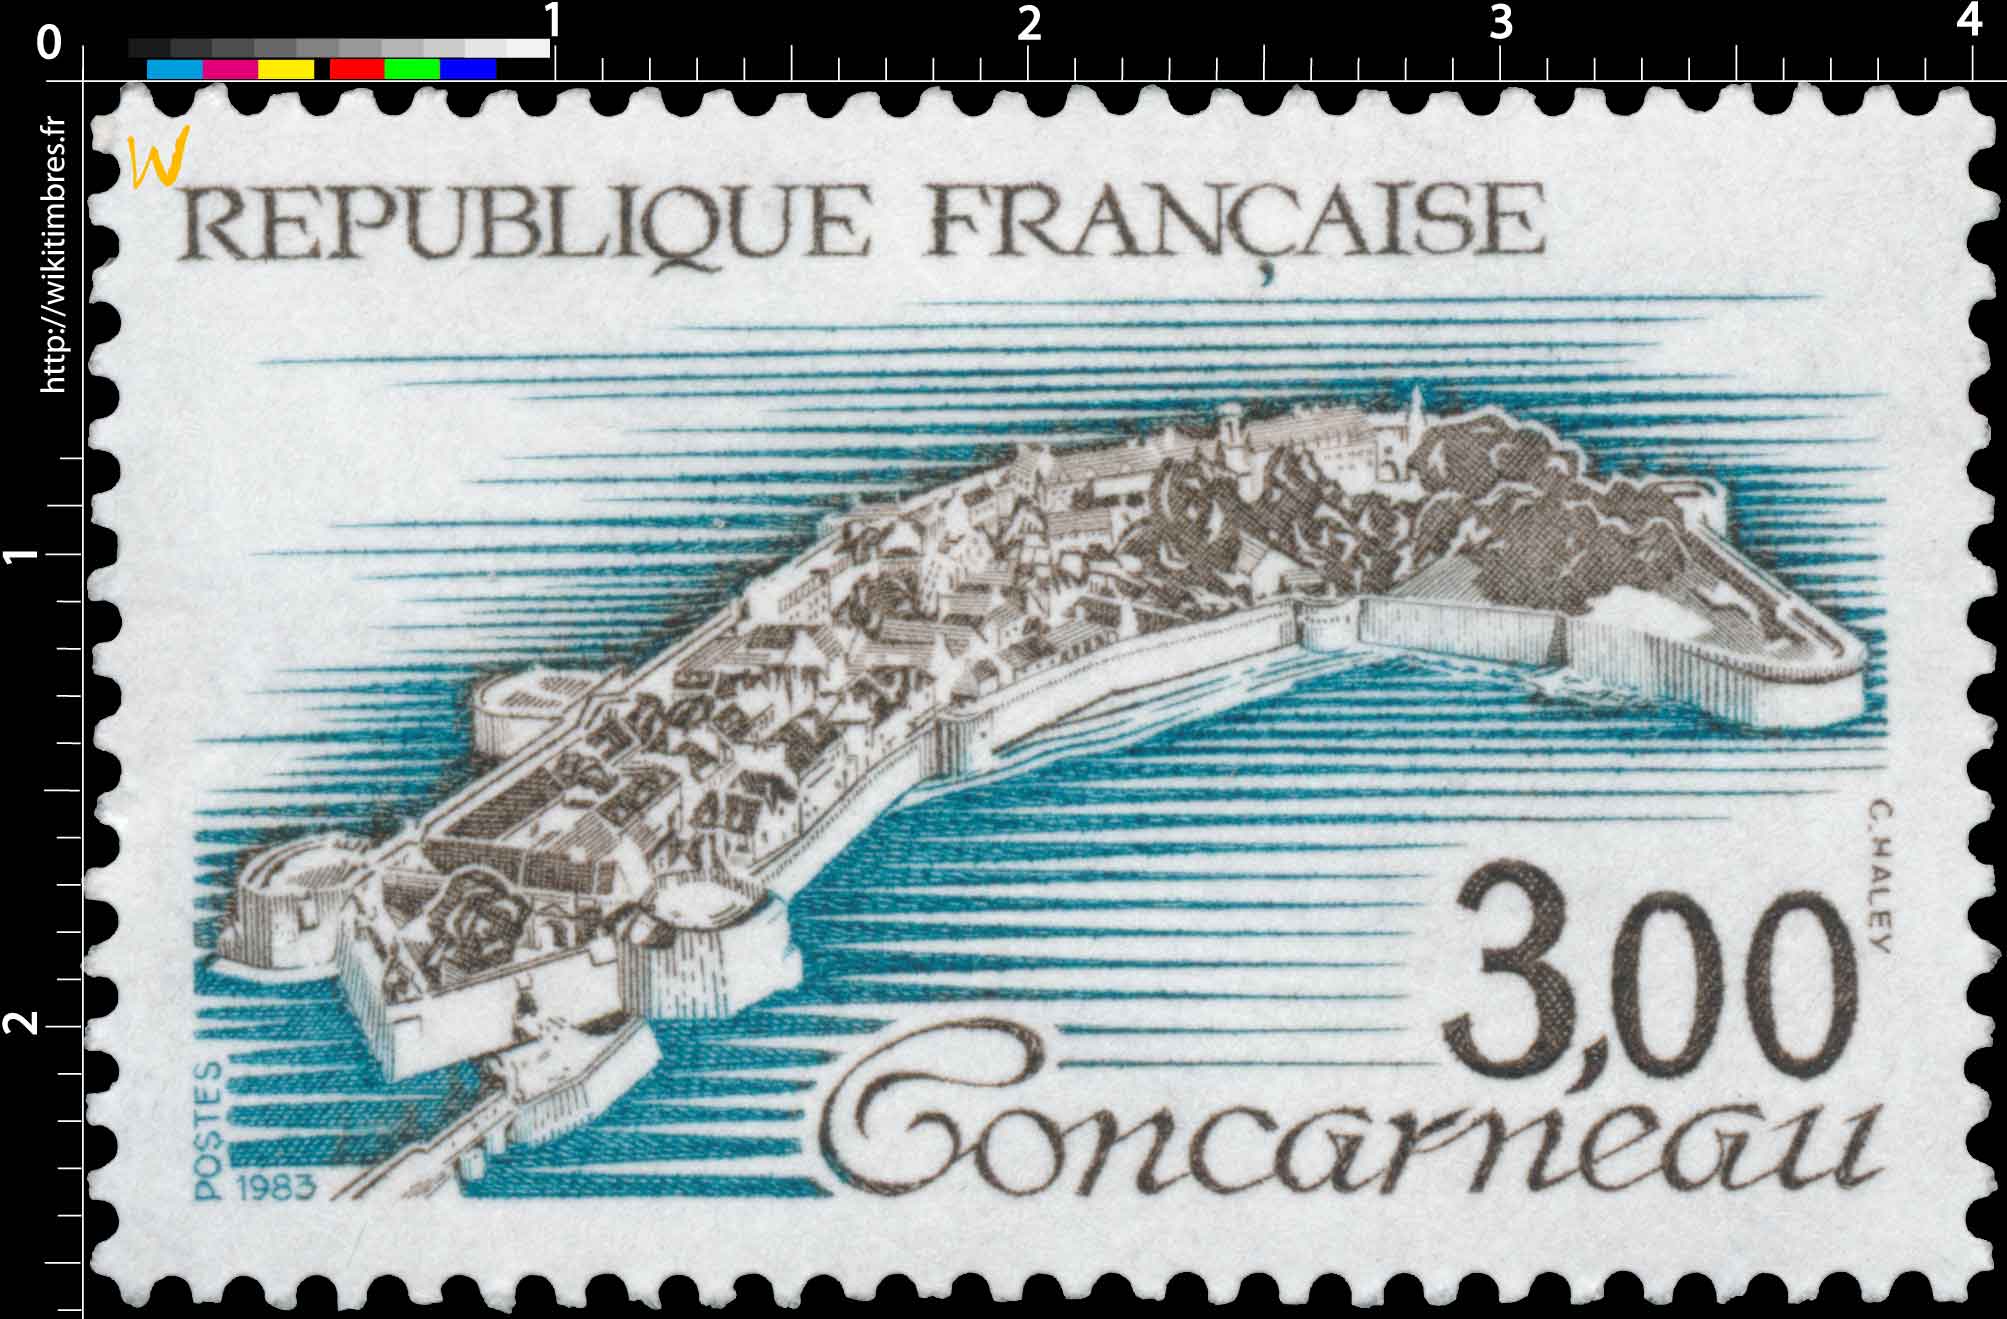 1983 Concarneau